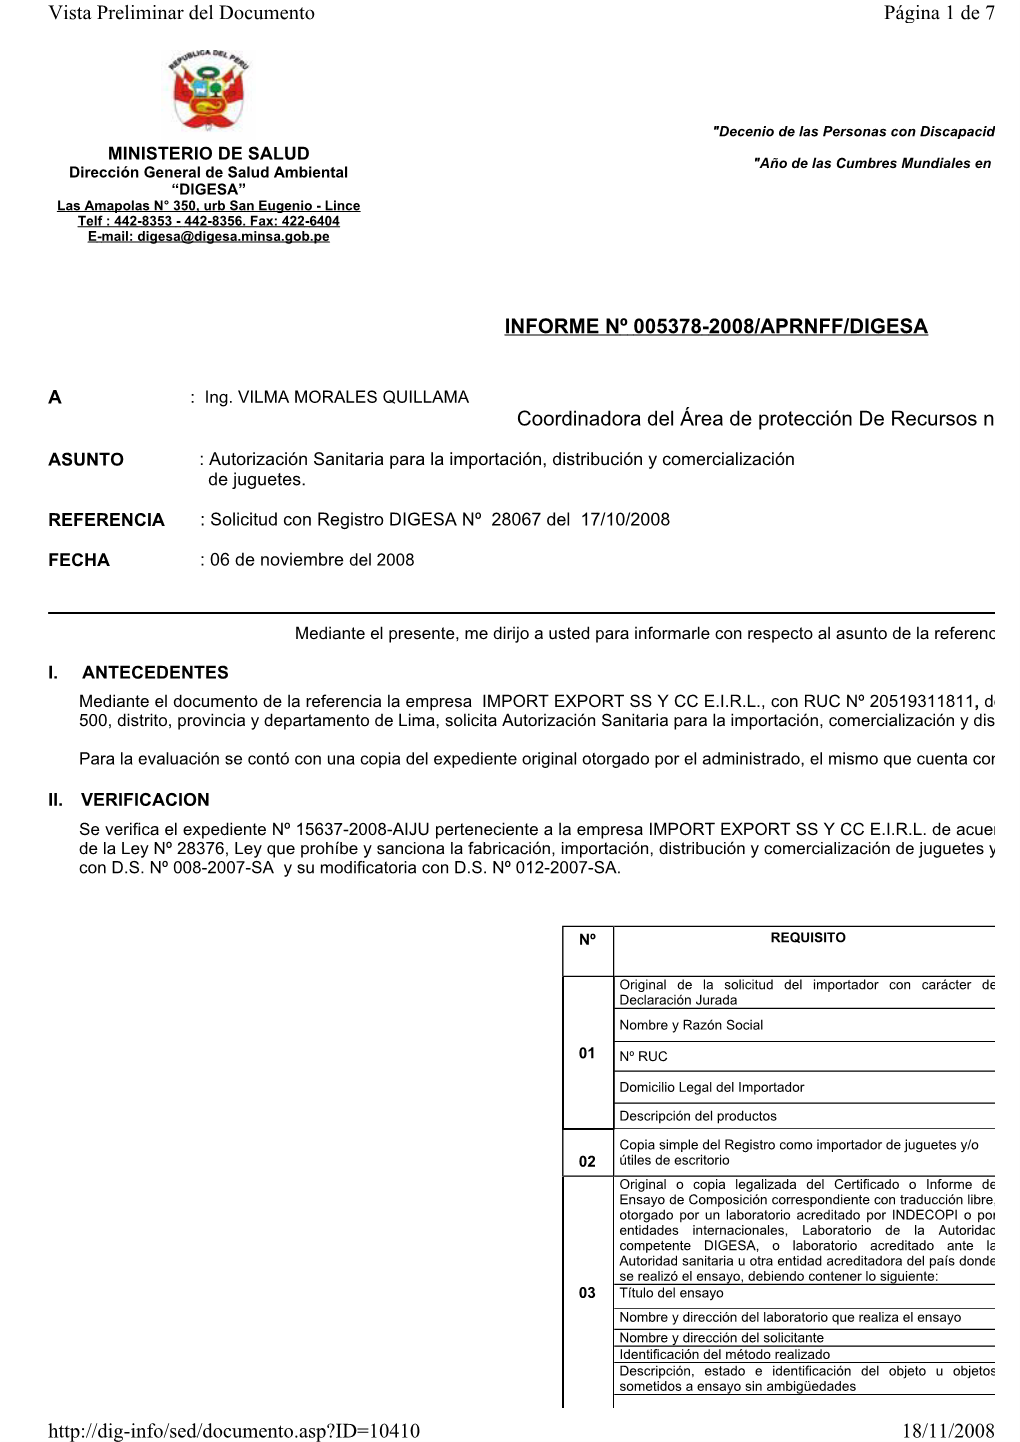 Informe Nº 005378-2008/Aprnff/Digesa